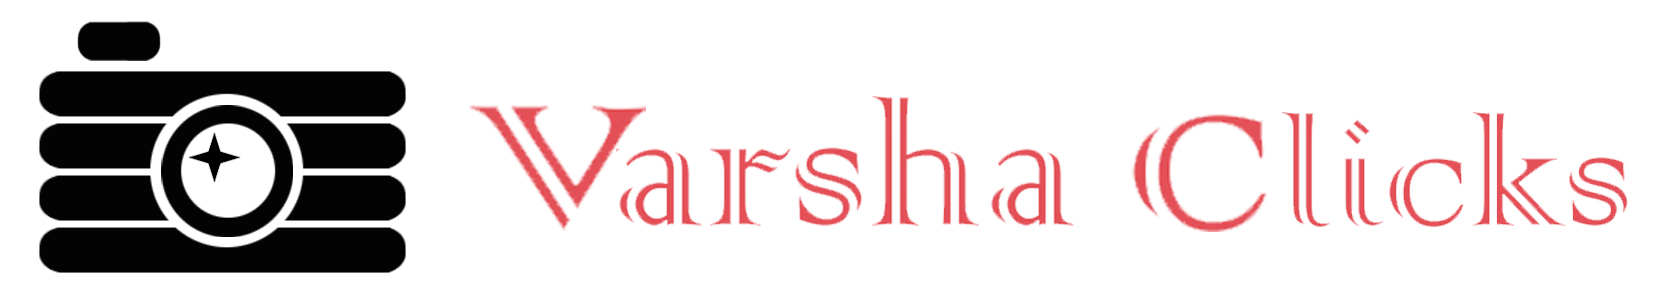 Varsha clicks logo